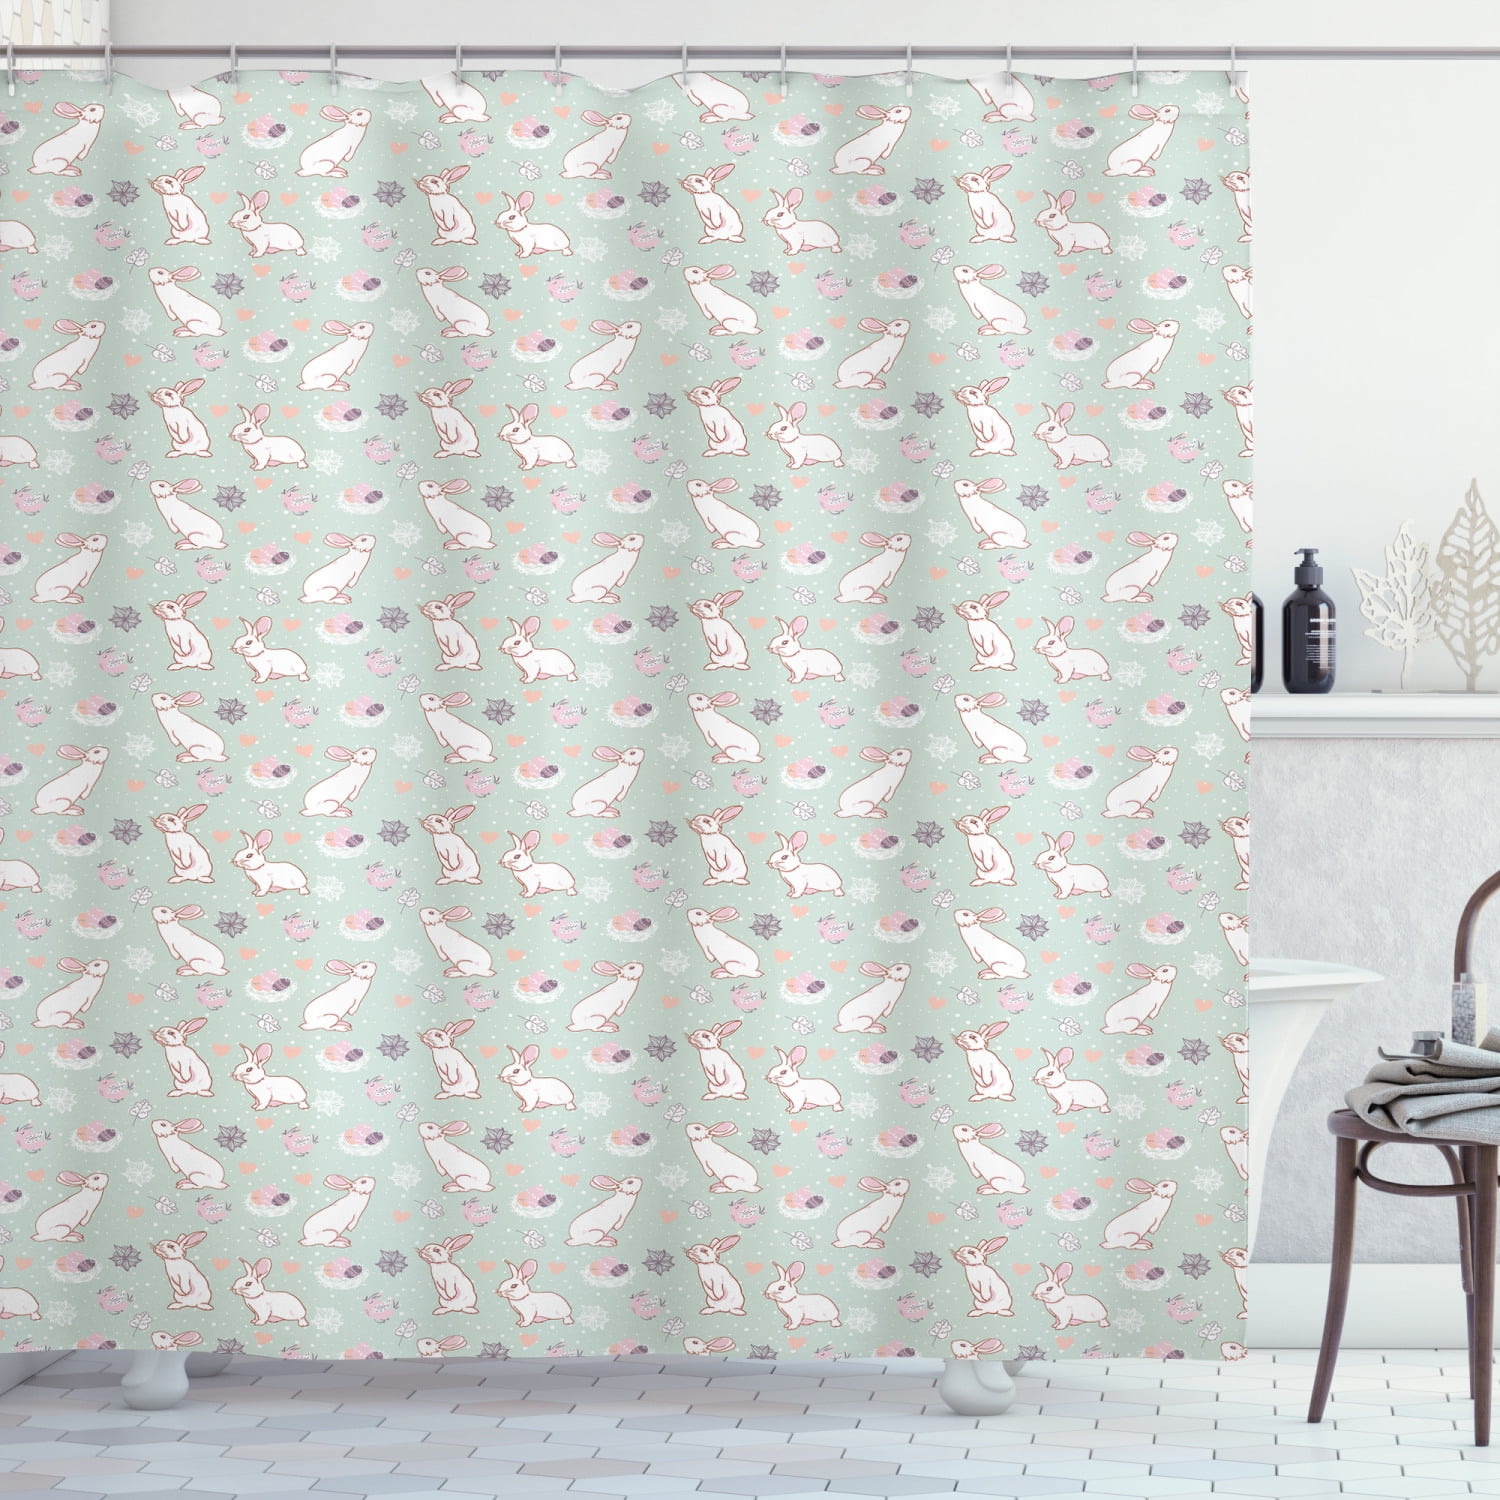 Happy Easter Cute Bunny Egg Carrot Bathroom Waterproof Fabric Shower Curtain Set 